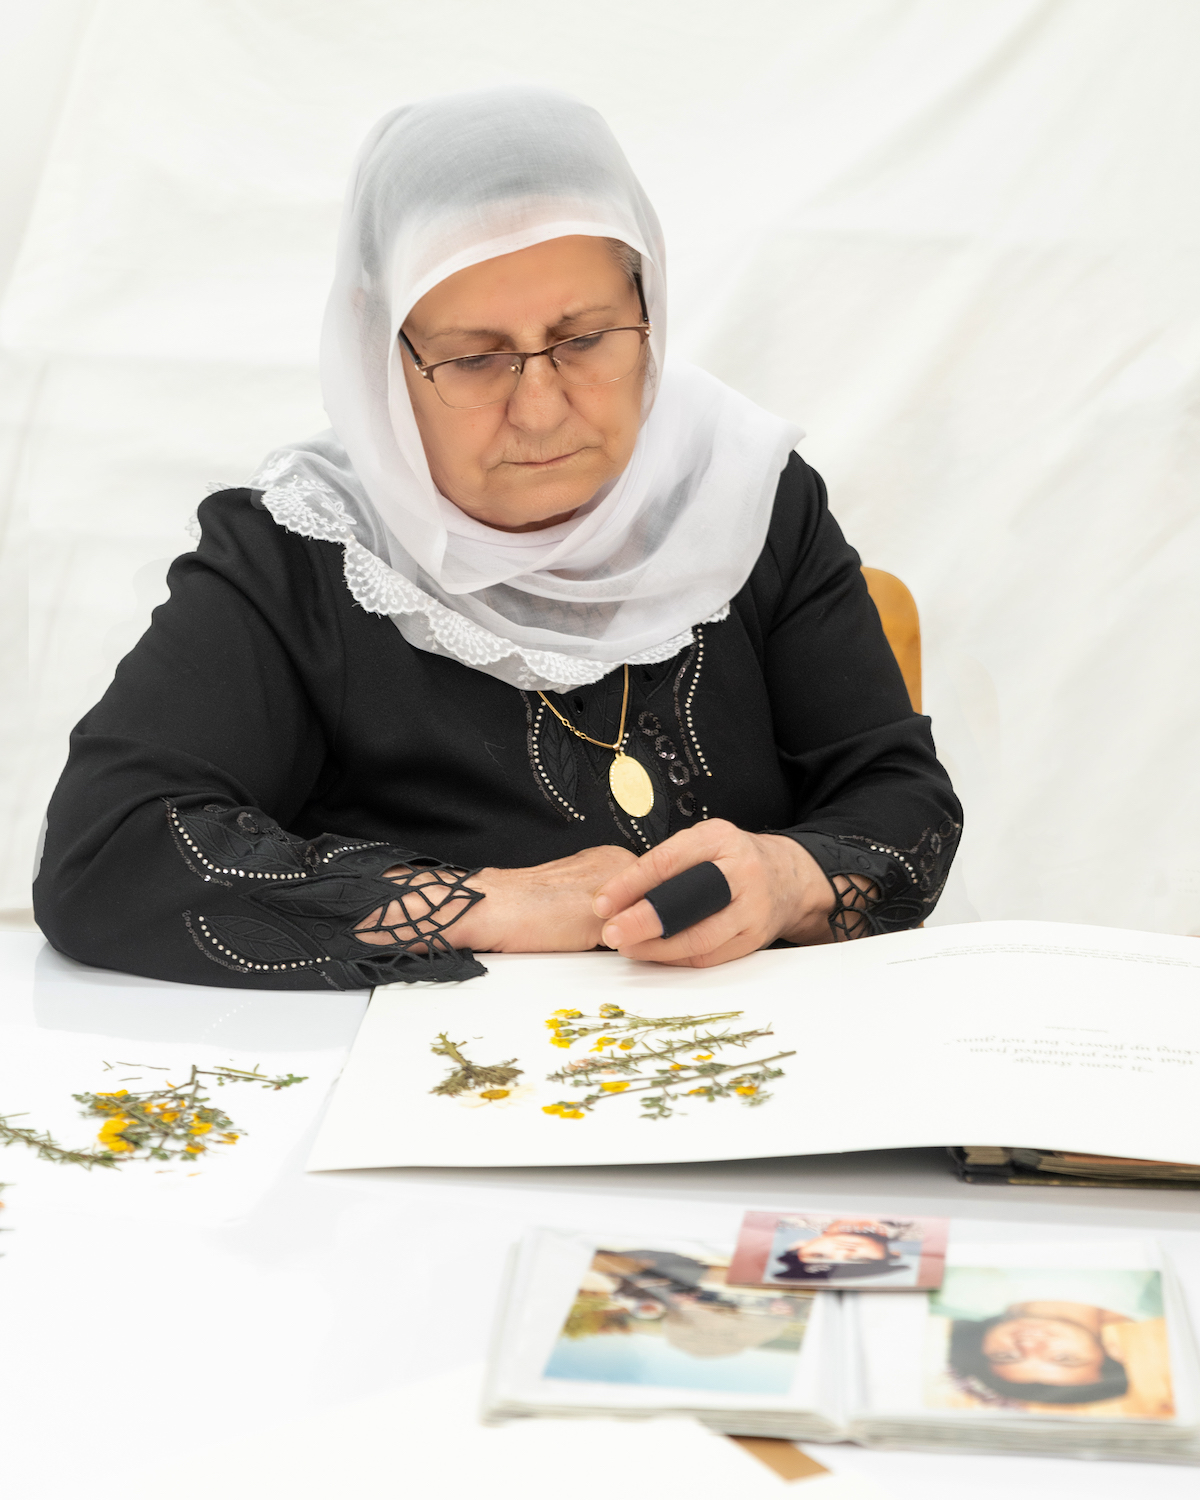 Bereaved Palestinian mother, Salma Zeidan